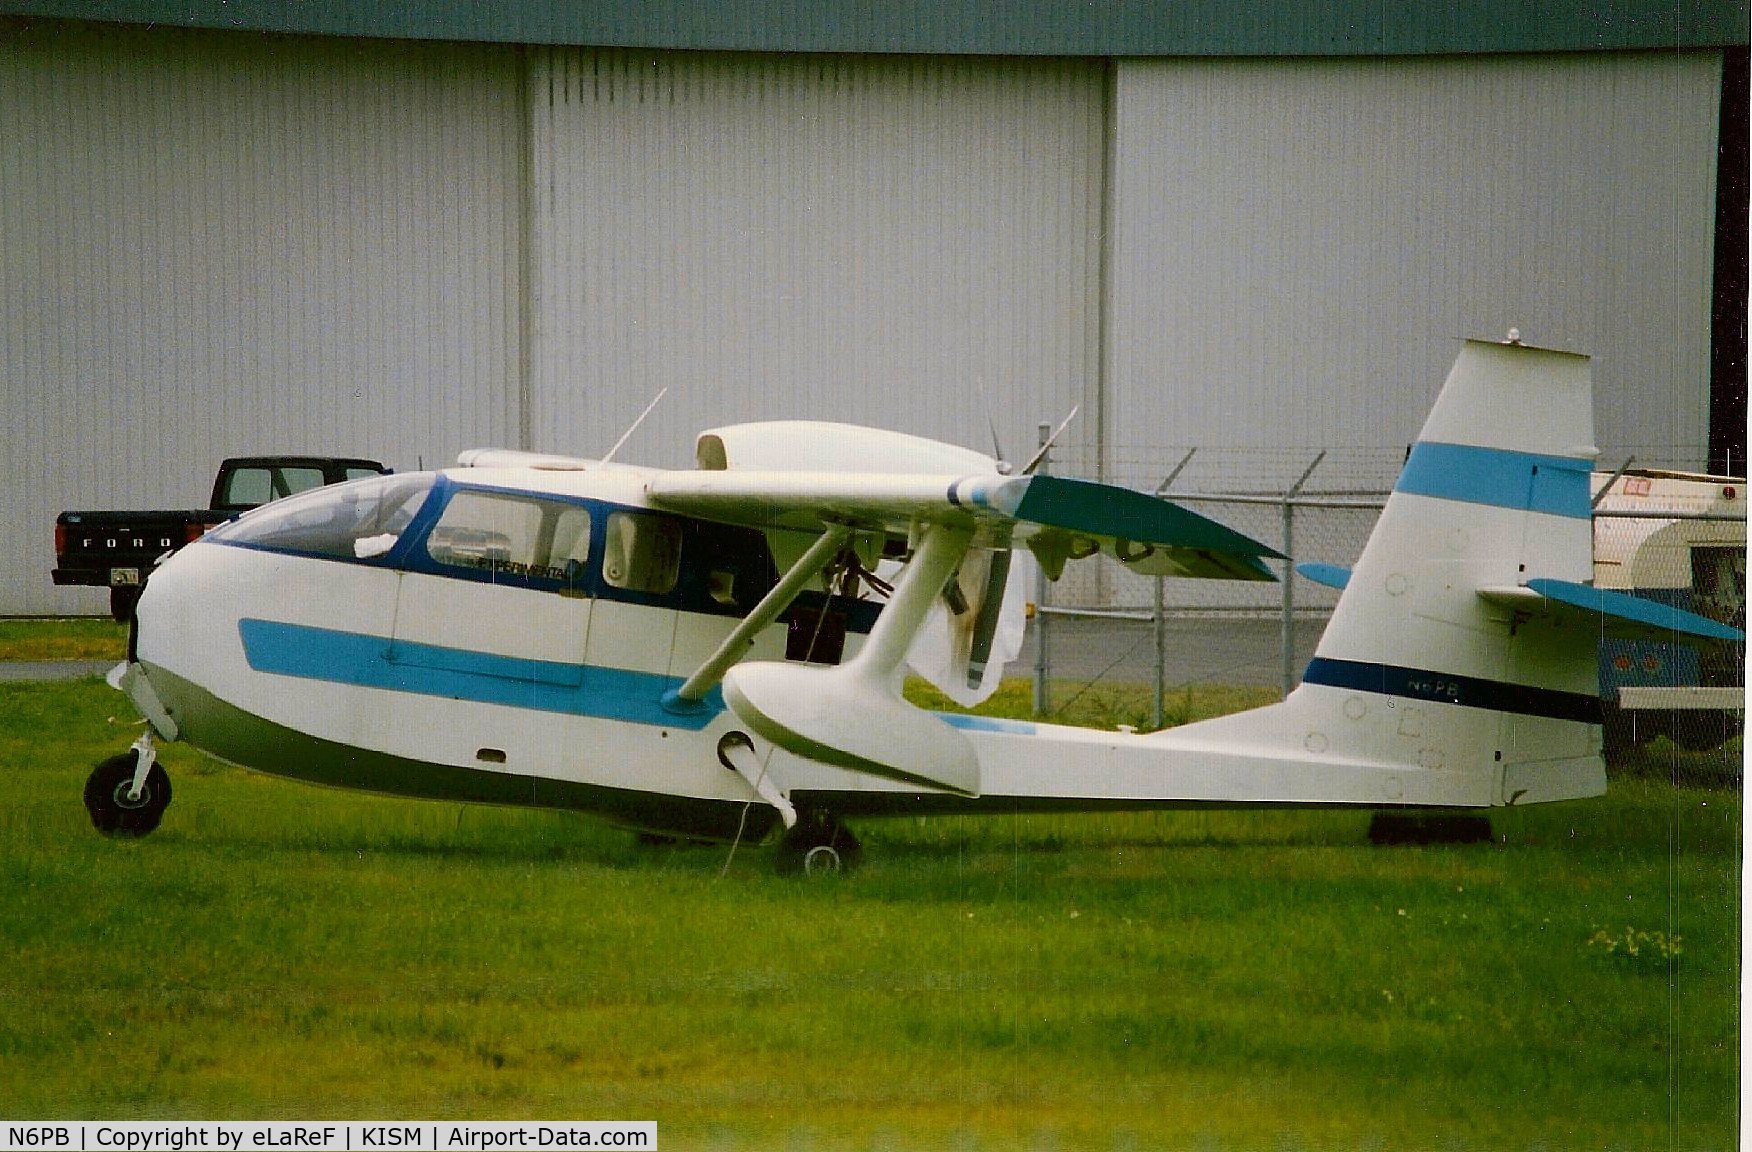 N6PB, 1974 Spenser Air Car S-12-E C/N PB2, Seen at Kissimee June 2004
Registration very faint on the dark blue band on the fin